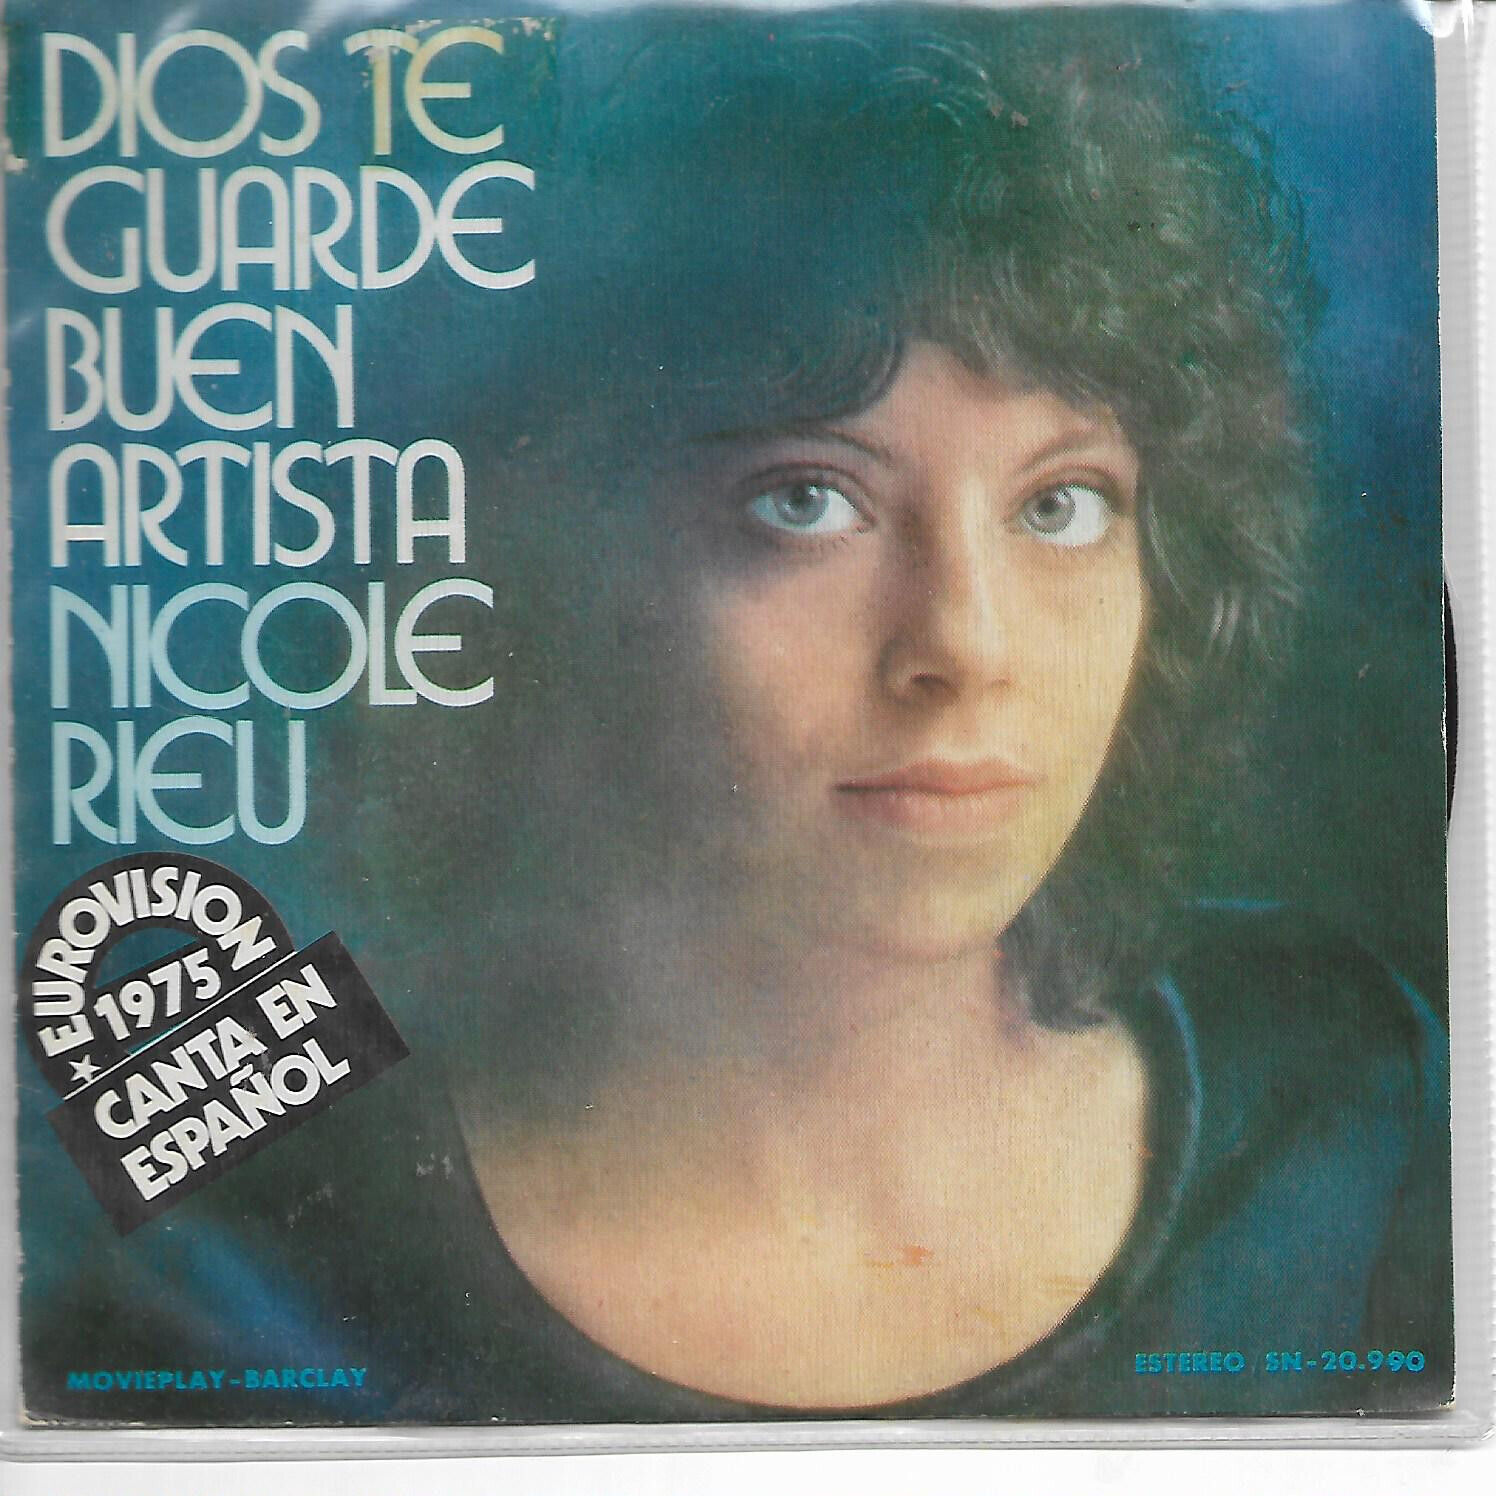 NICOLE RIEU 7"PS Spain 1975 Dios te guarde buen artista (In Spanish) EUROVISION